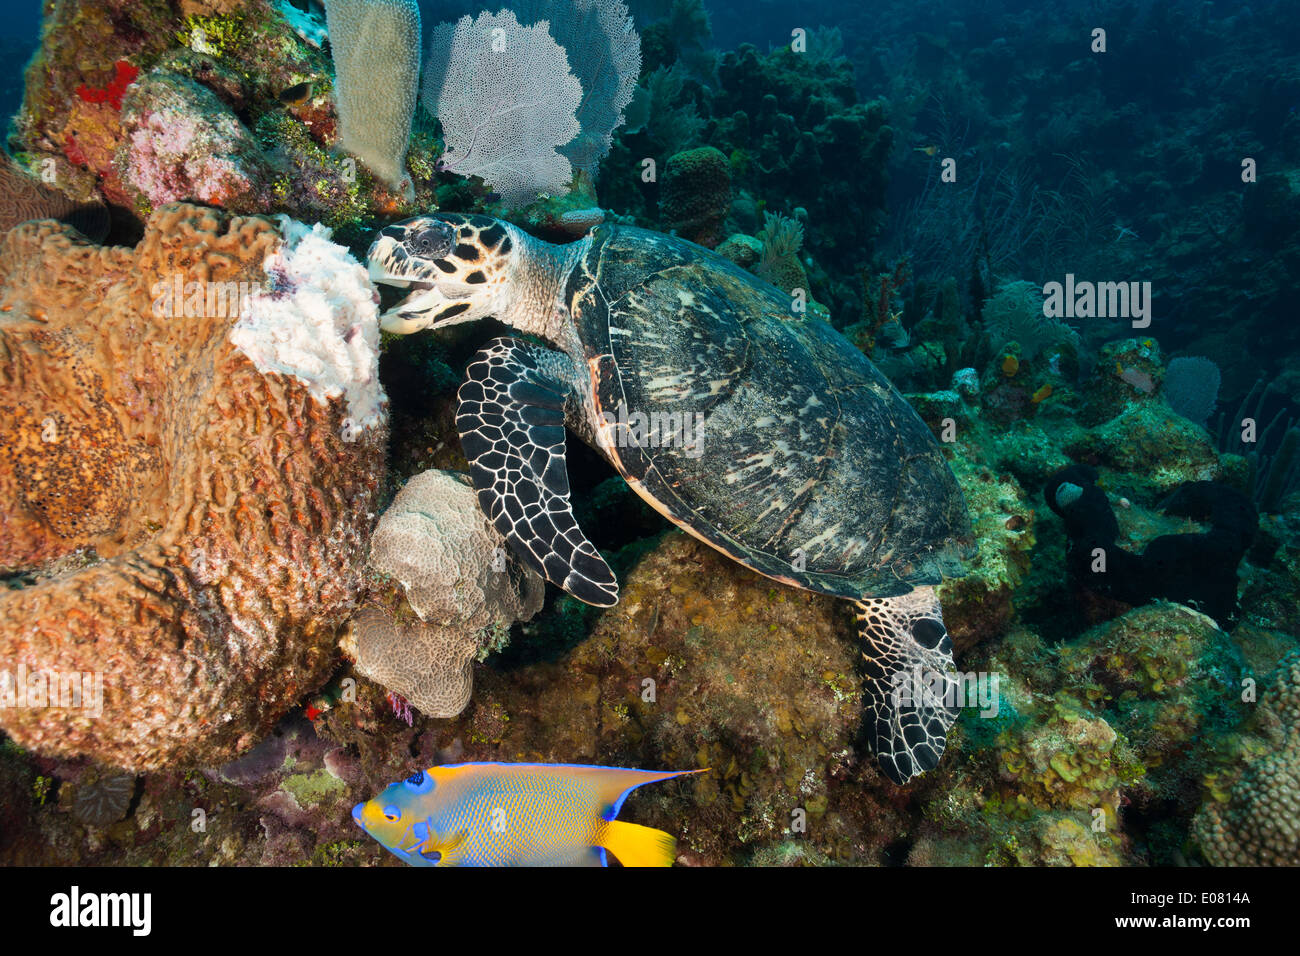 Atlantic Hawksbill Turtle (Eretmochelys imbricata imbricata) feeding on a Leathery Barrel Sponge (Geodia neptuni) Stock Photo